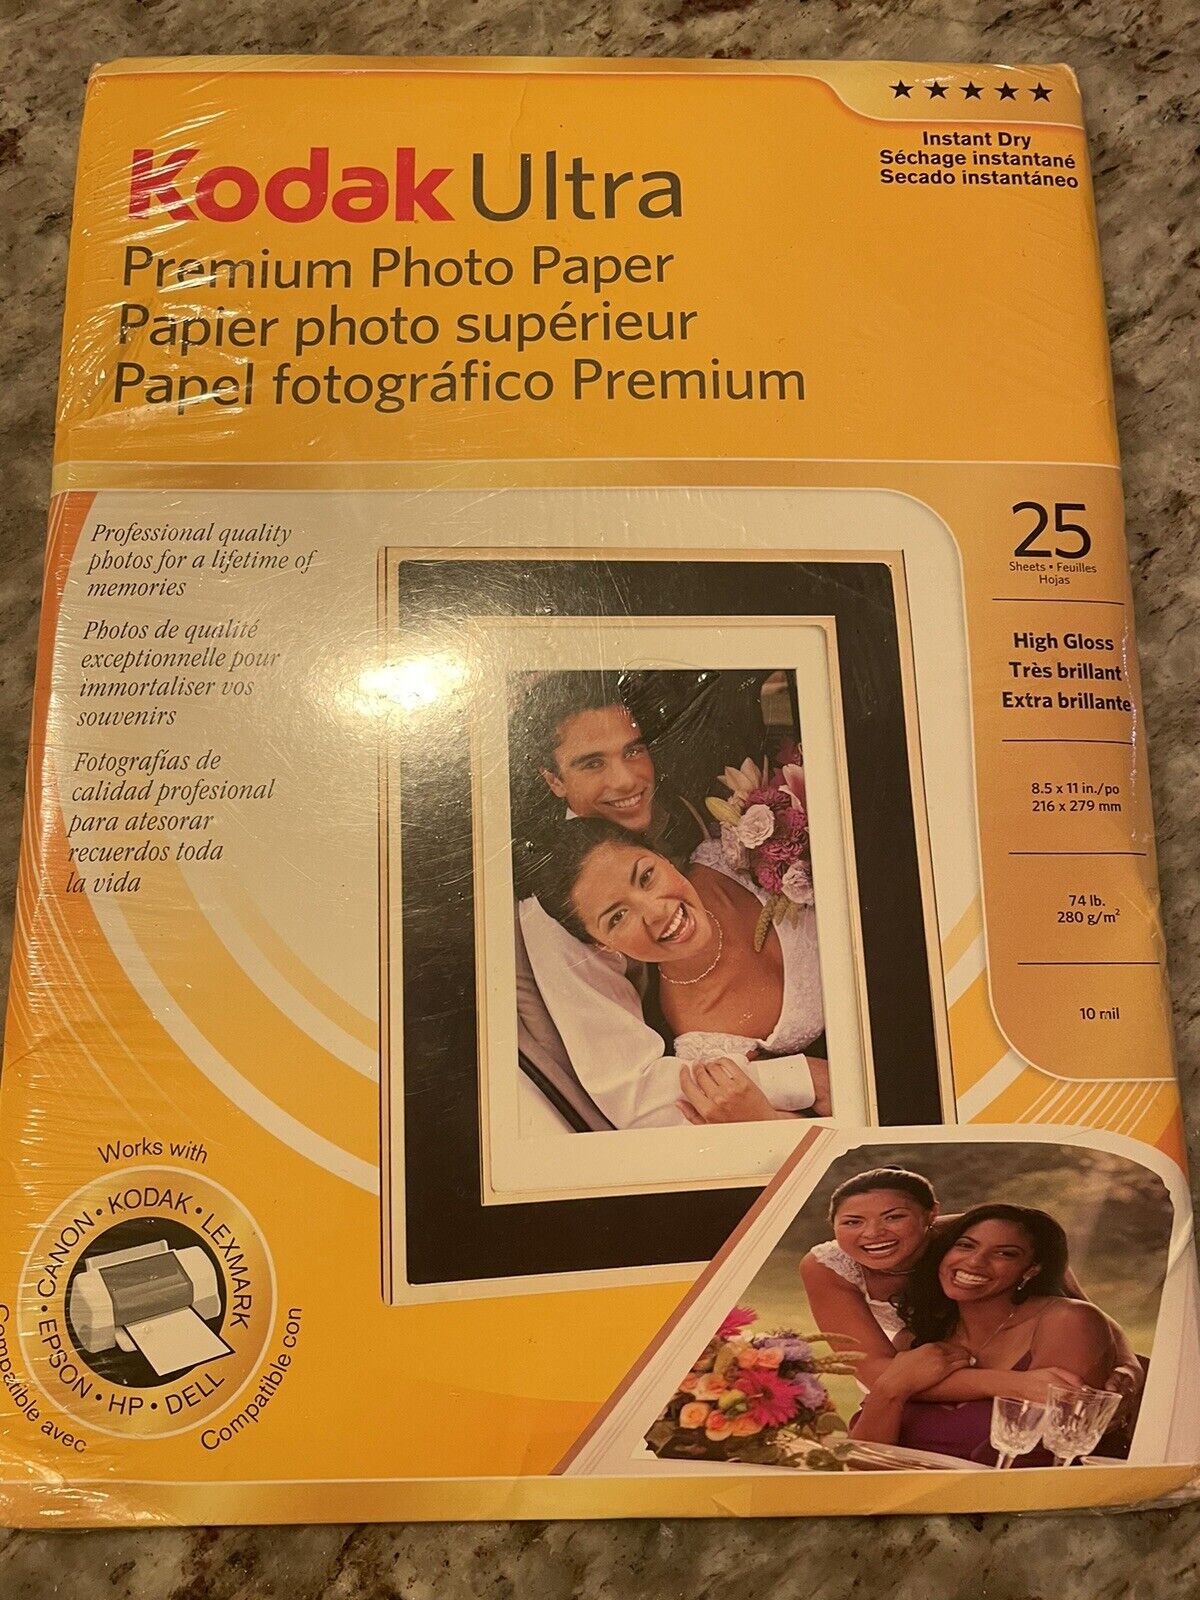 Kodak Ultra-Premium Photo Paper 4x6 Instant Dry High Gloss 25 sheets New 2007